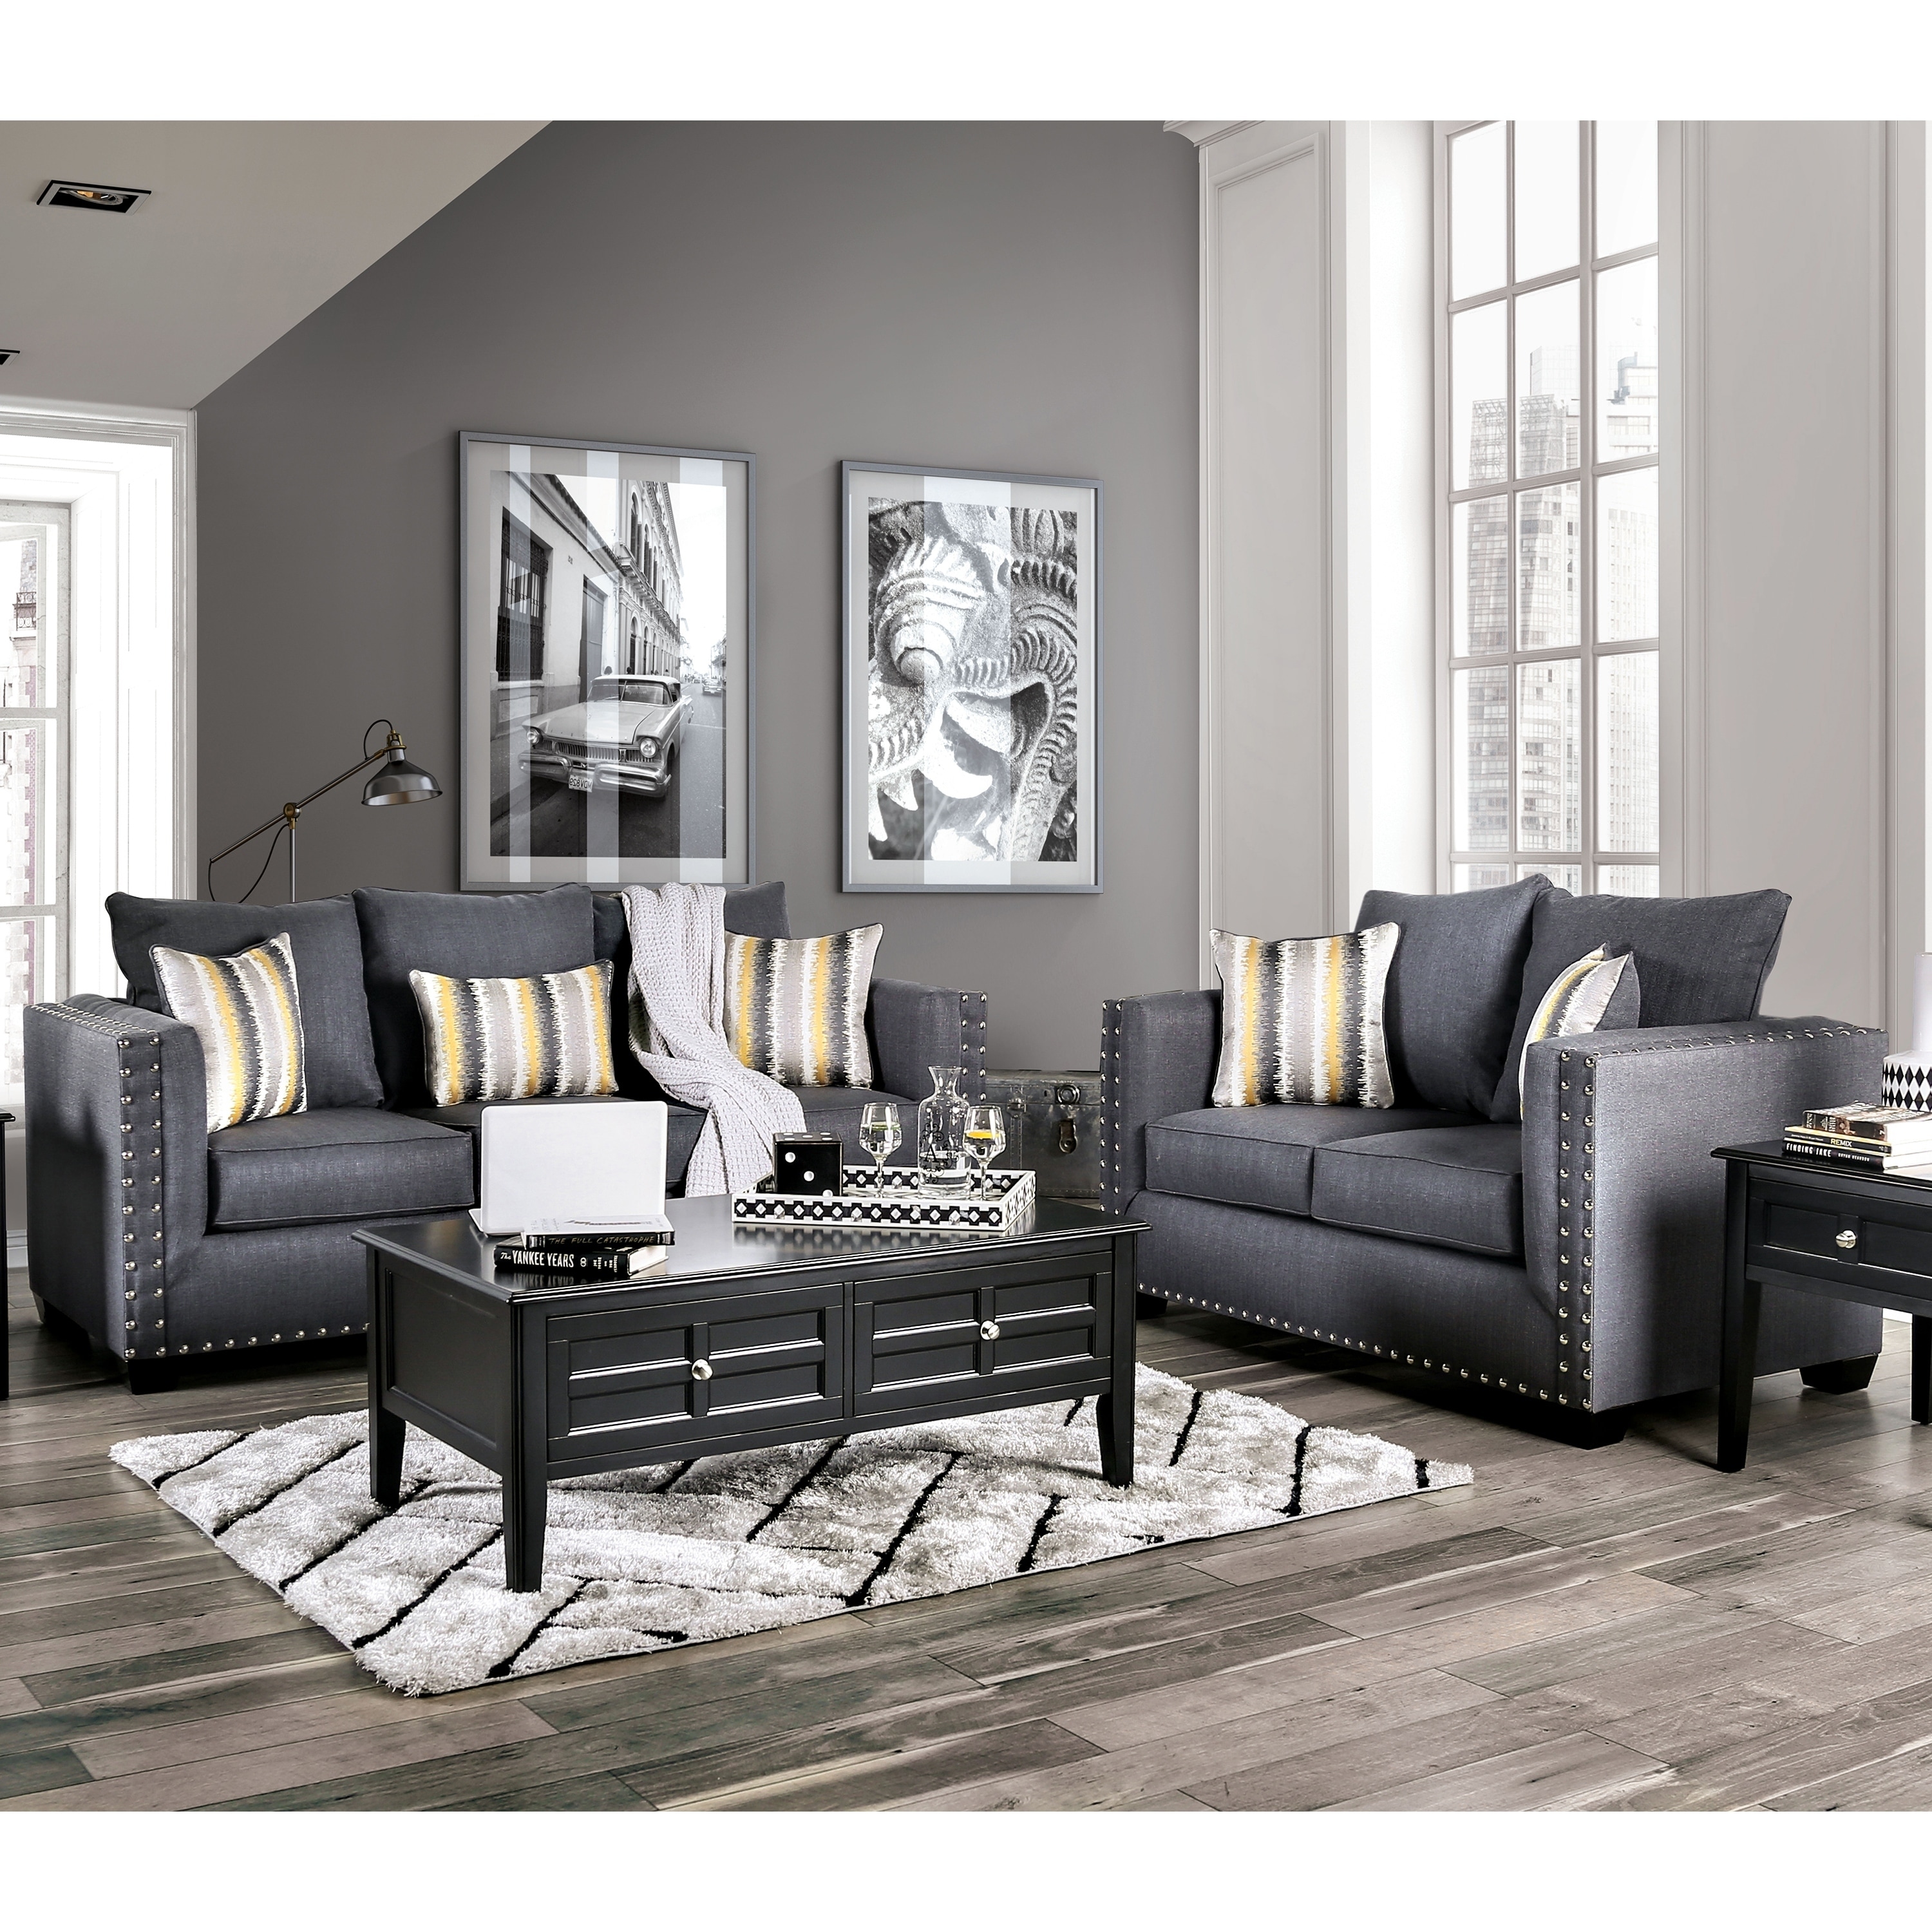 Furniture Of America Ambrolauri Slate Grey 2 Piece Living Room Set On Sale Overstock 28406503